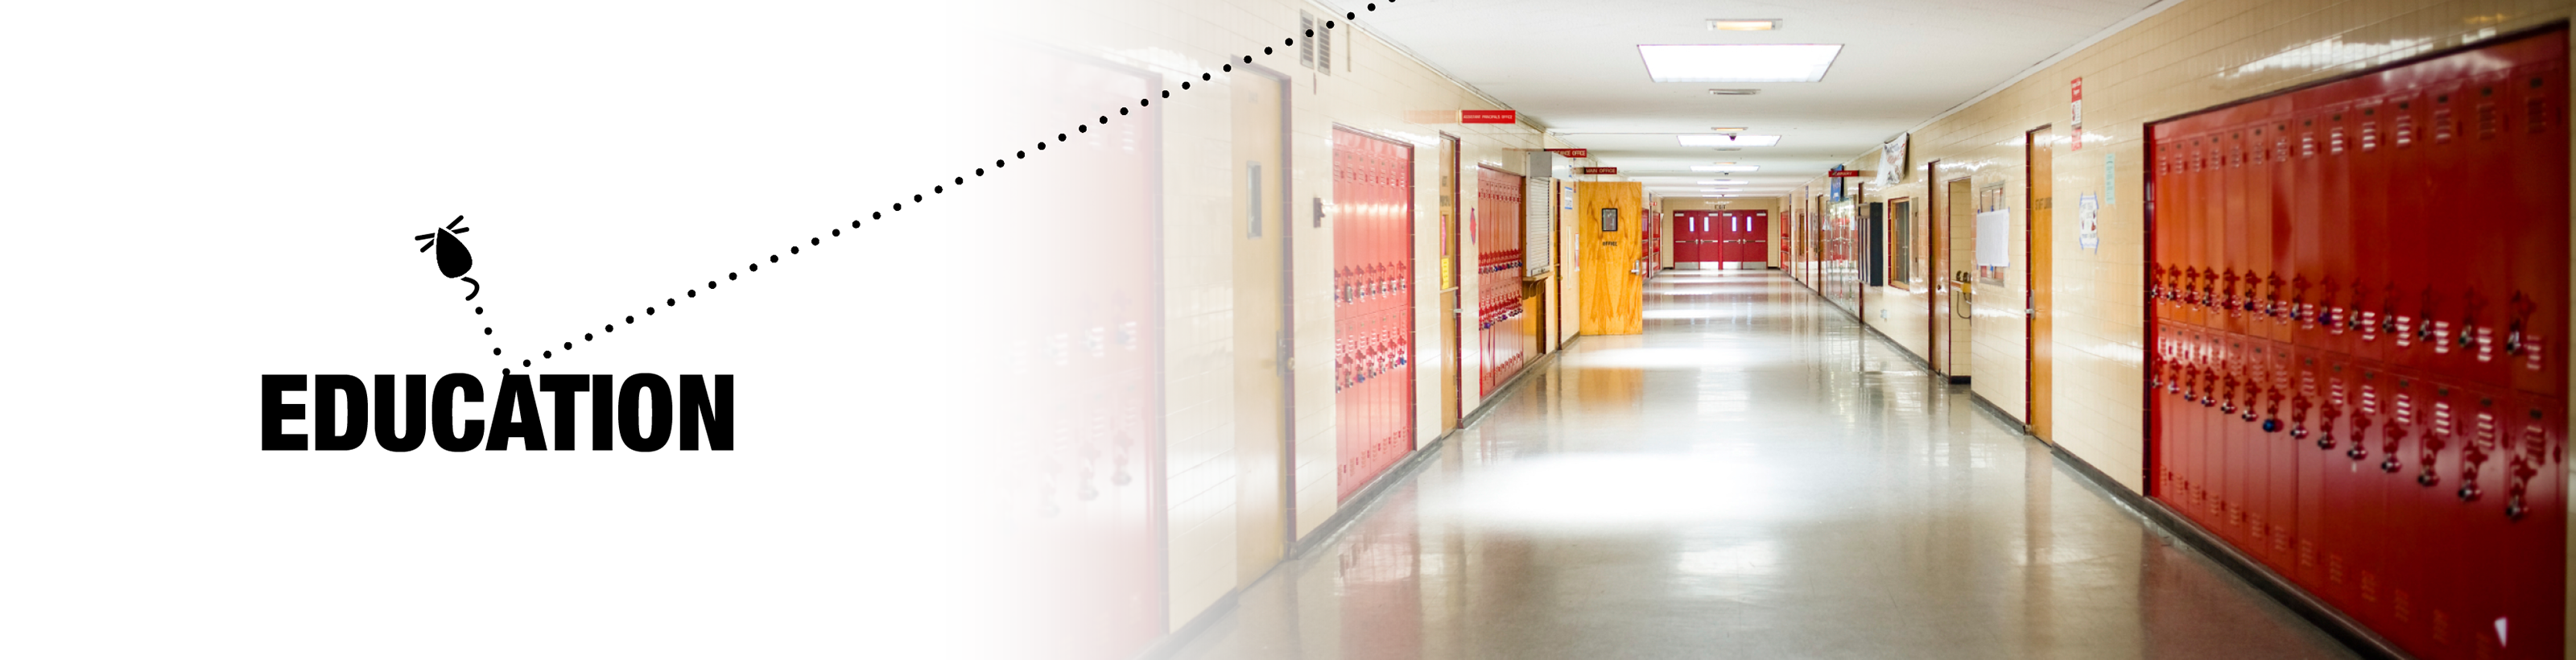 Eduction header with school hallway image